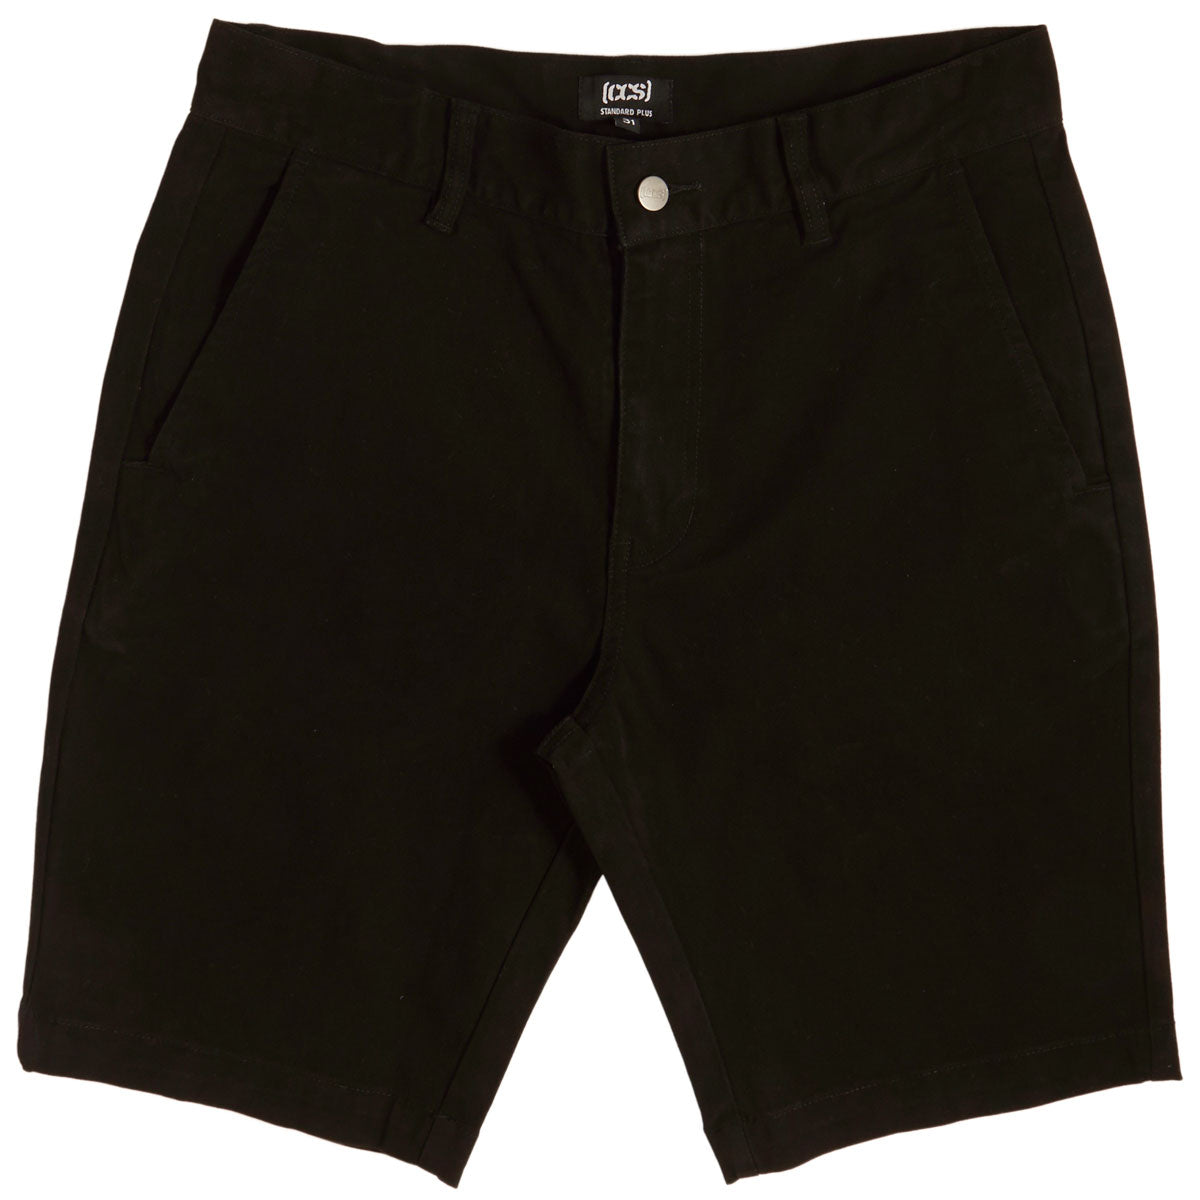 CCS Standard Plus Chino Shorts - Black image 5